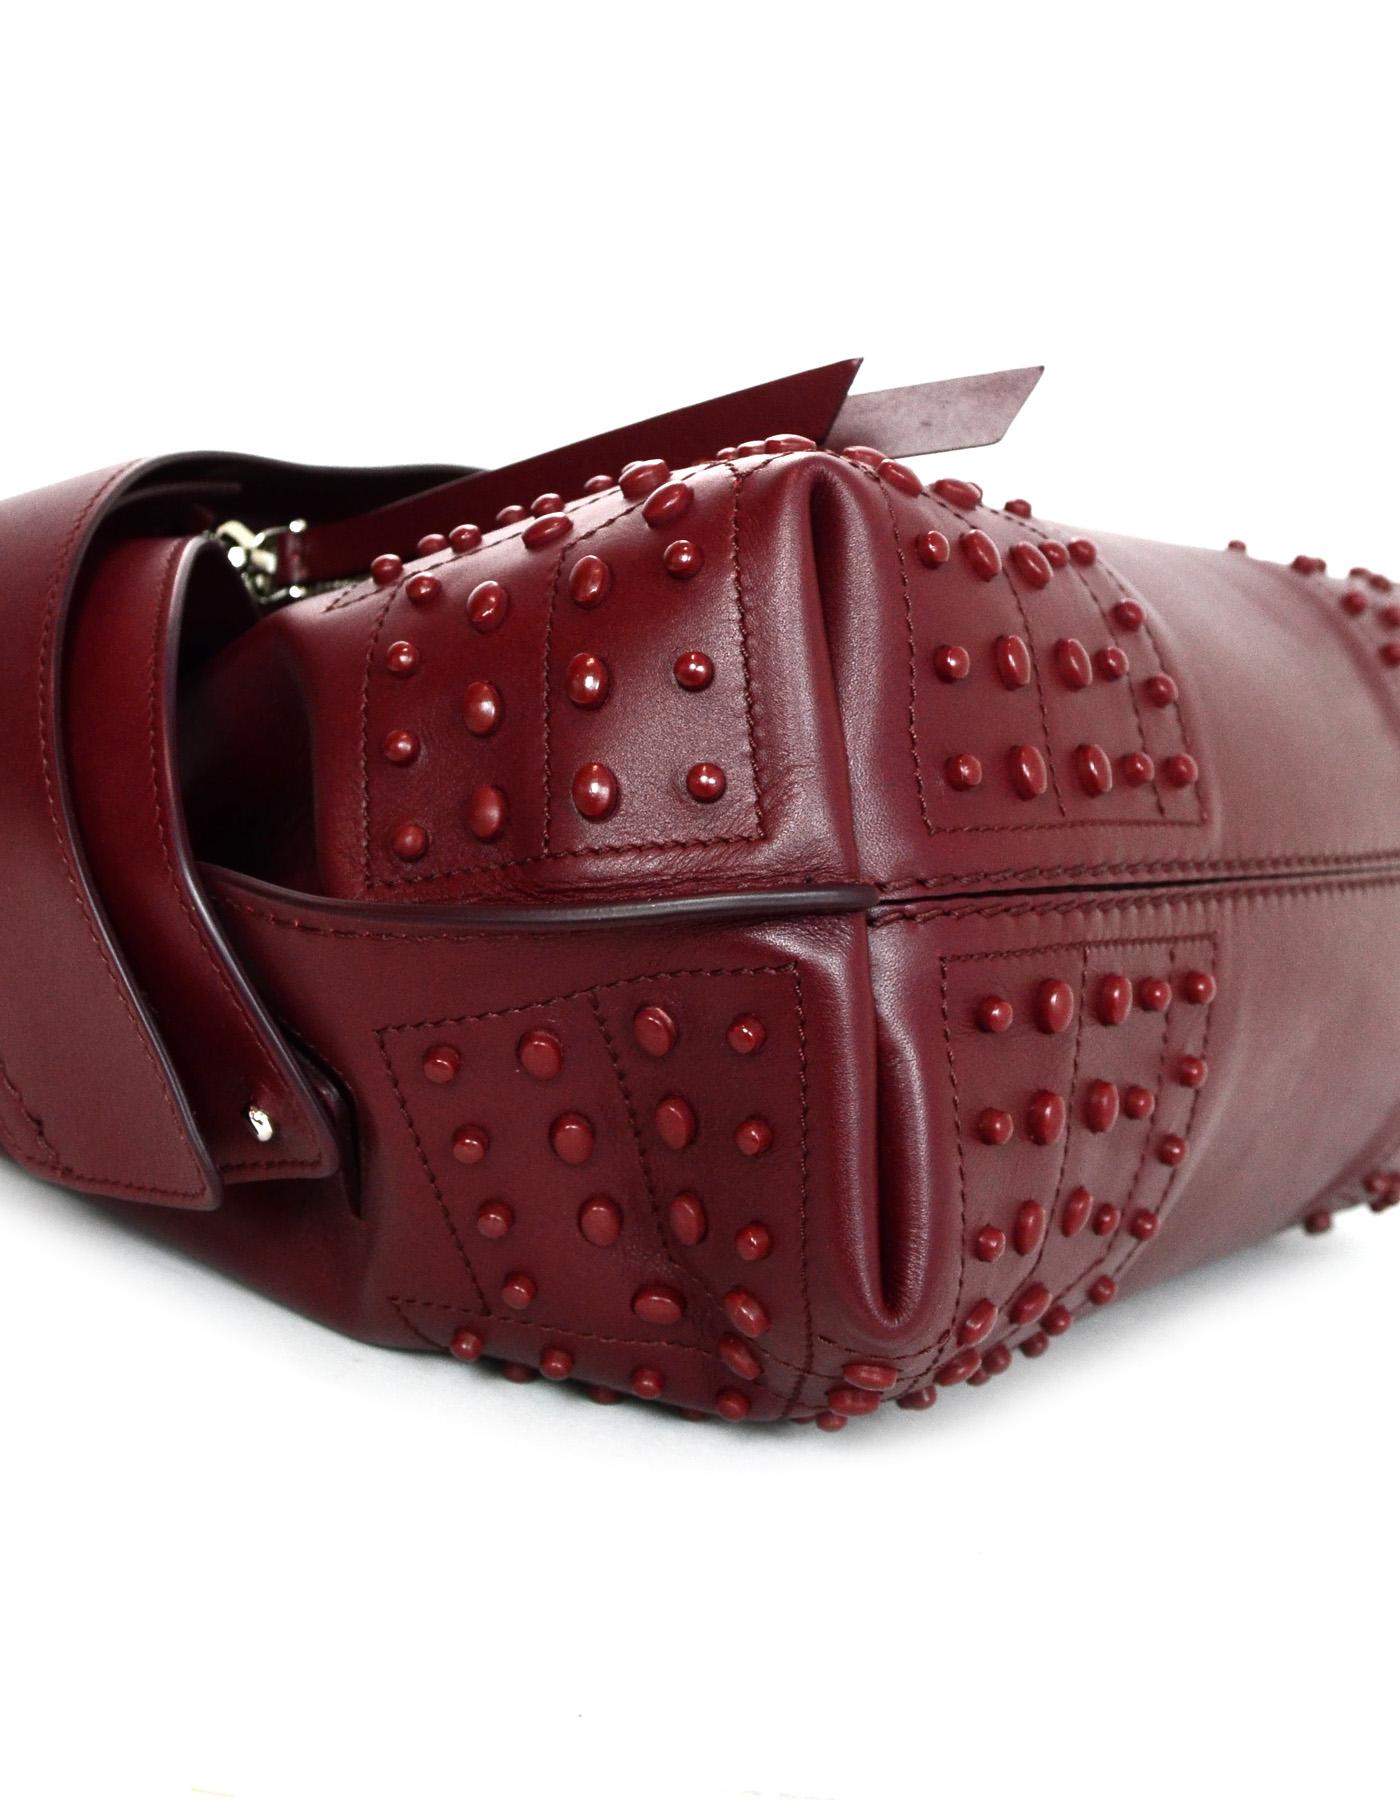 burgundy leather bag